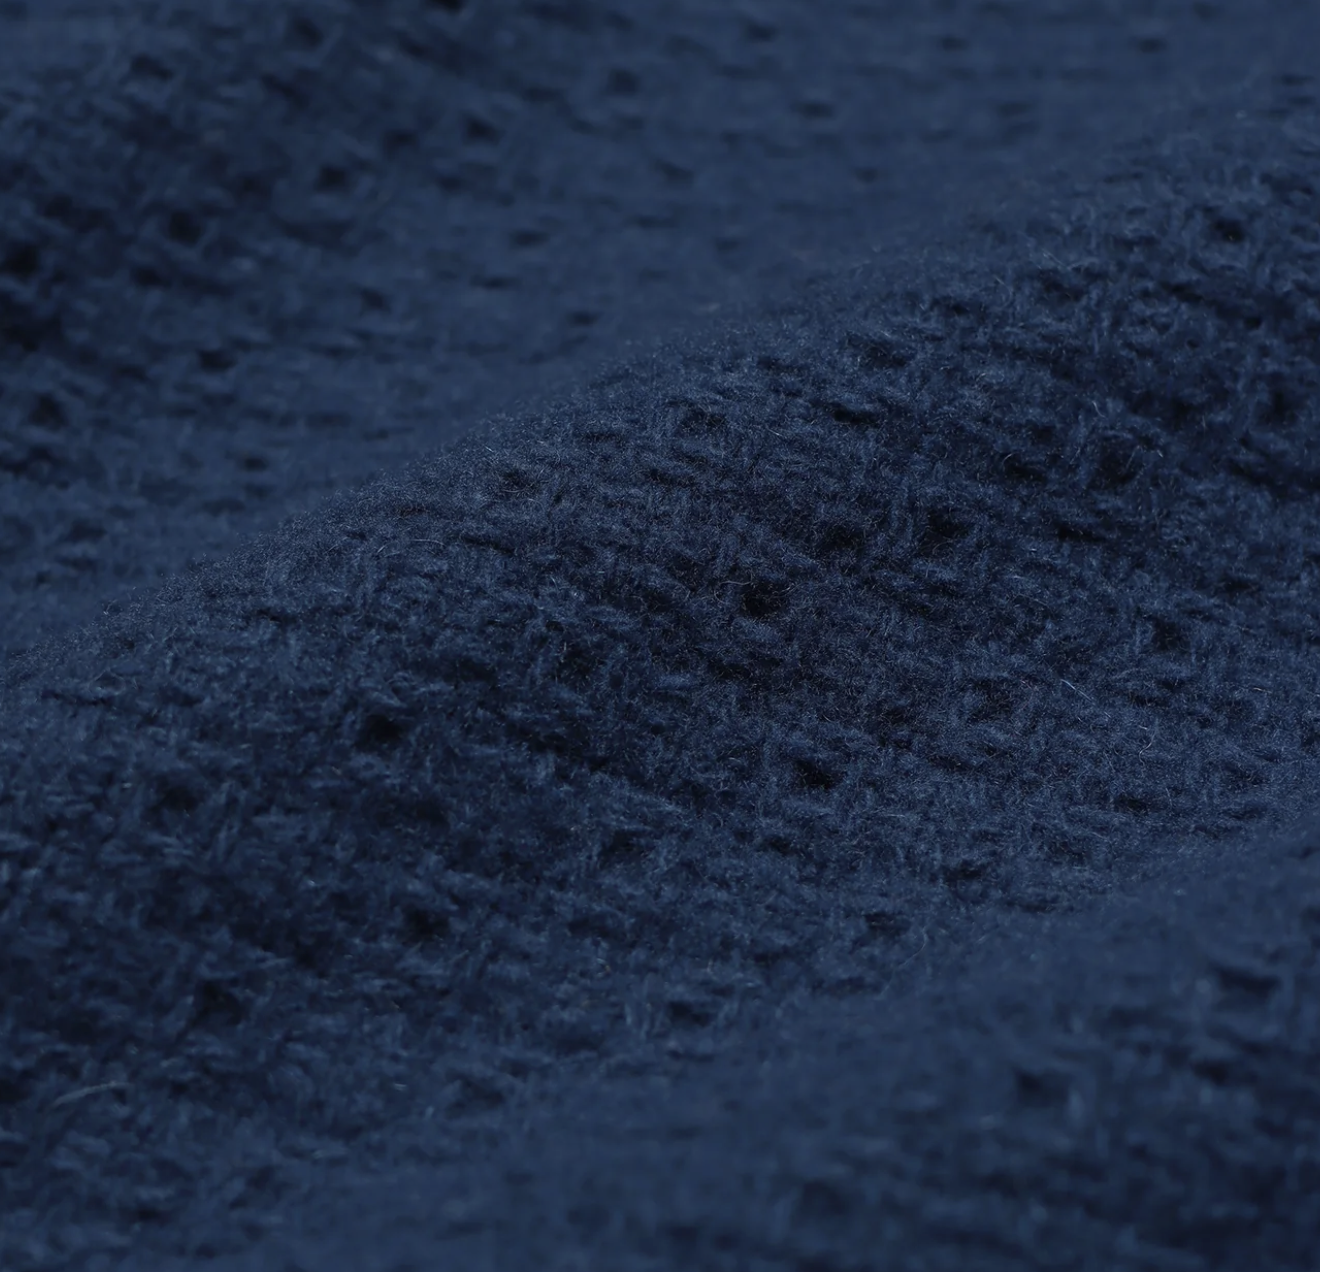 Station Jacket - Insignia Blue Textured Jacquard